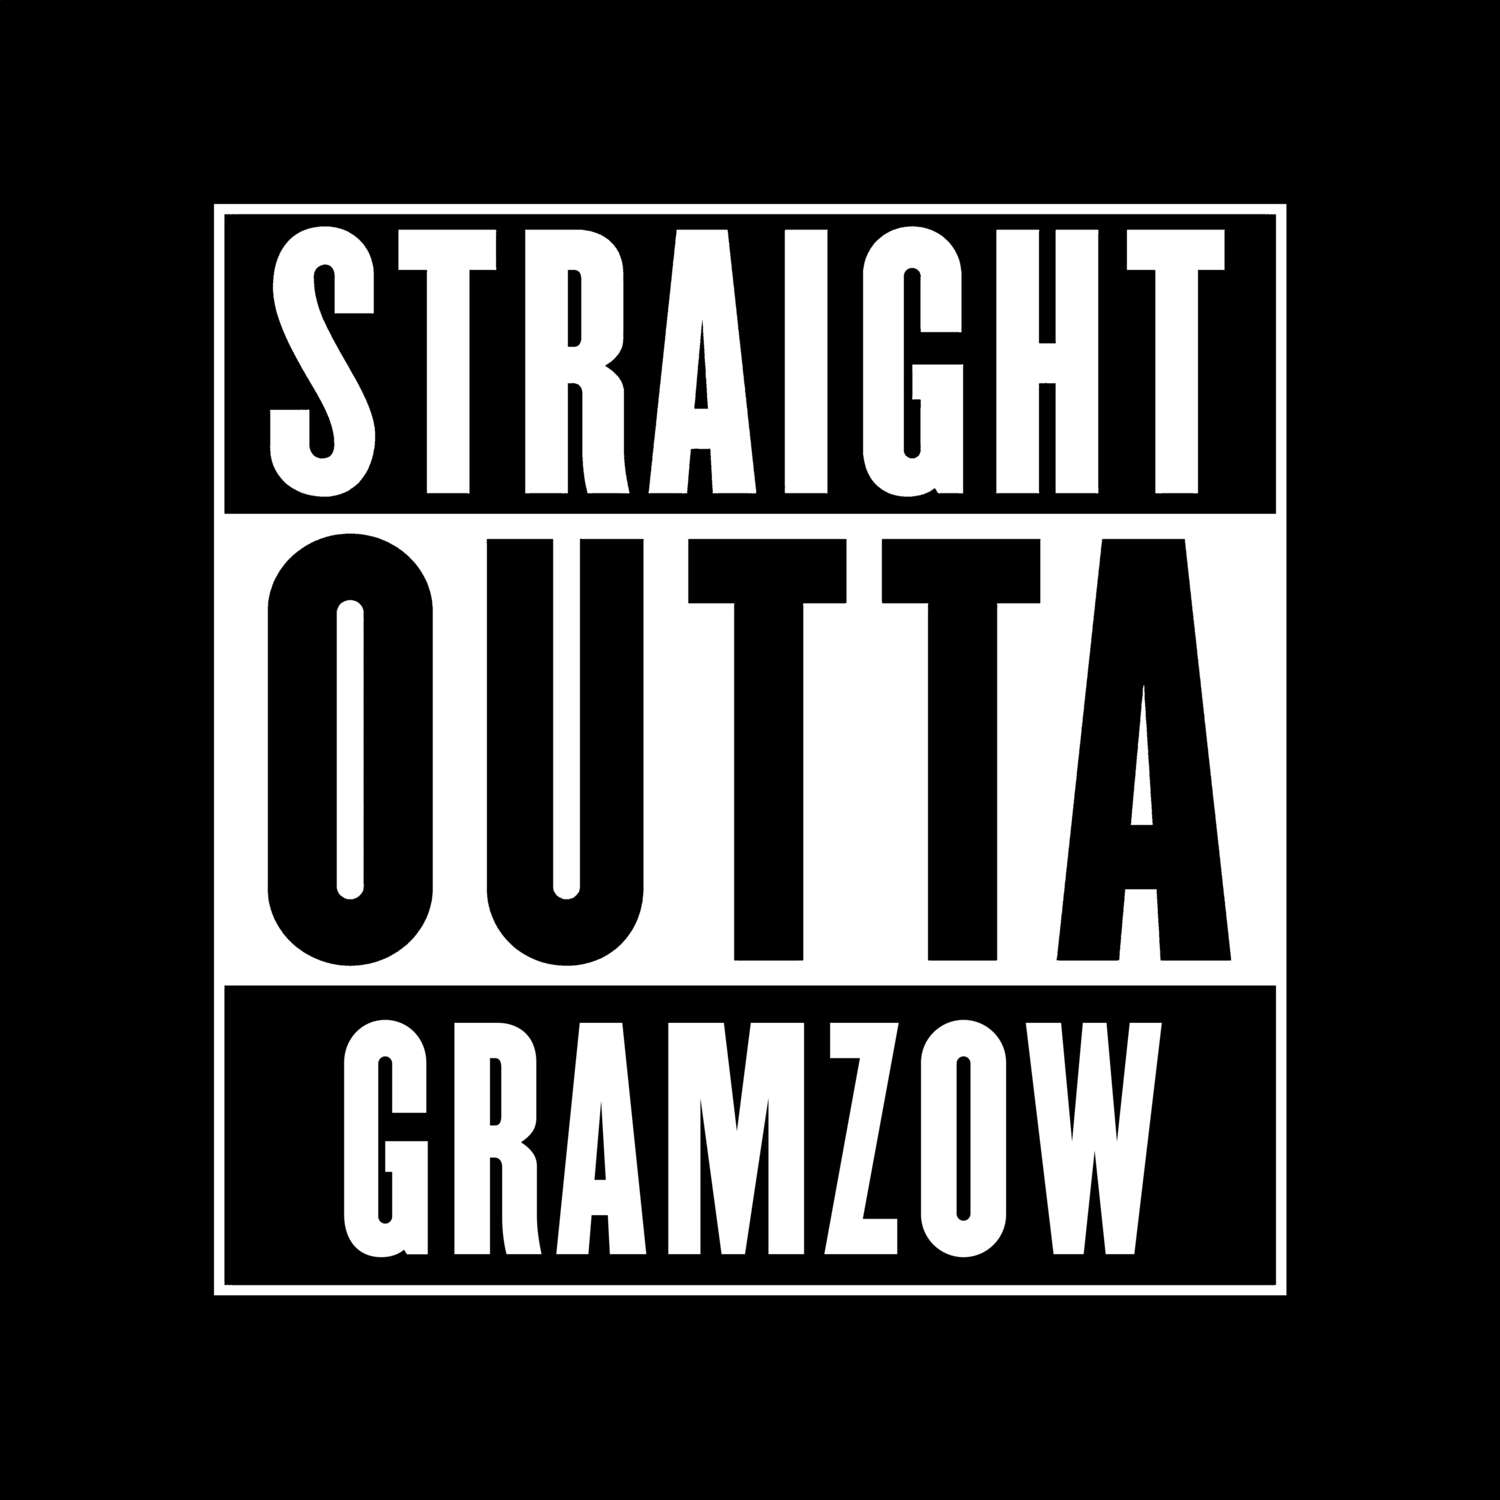 Gramzow T-Shirt »Straight Outta«